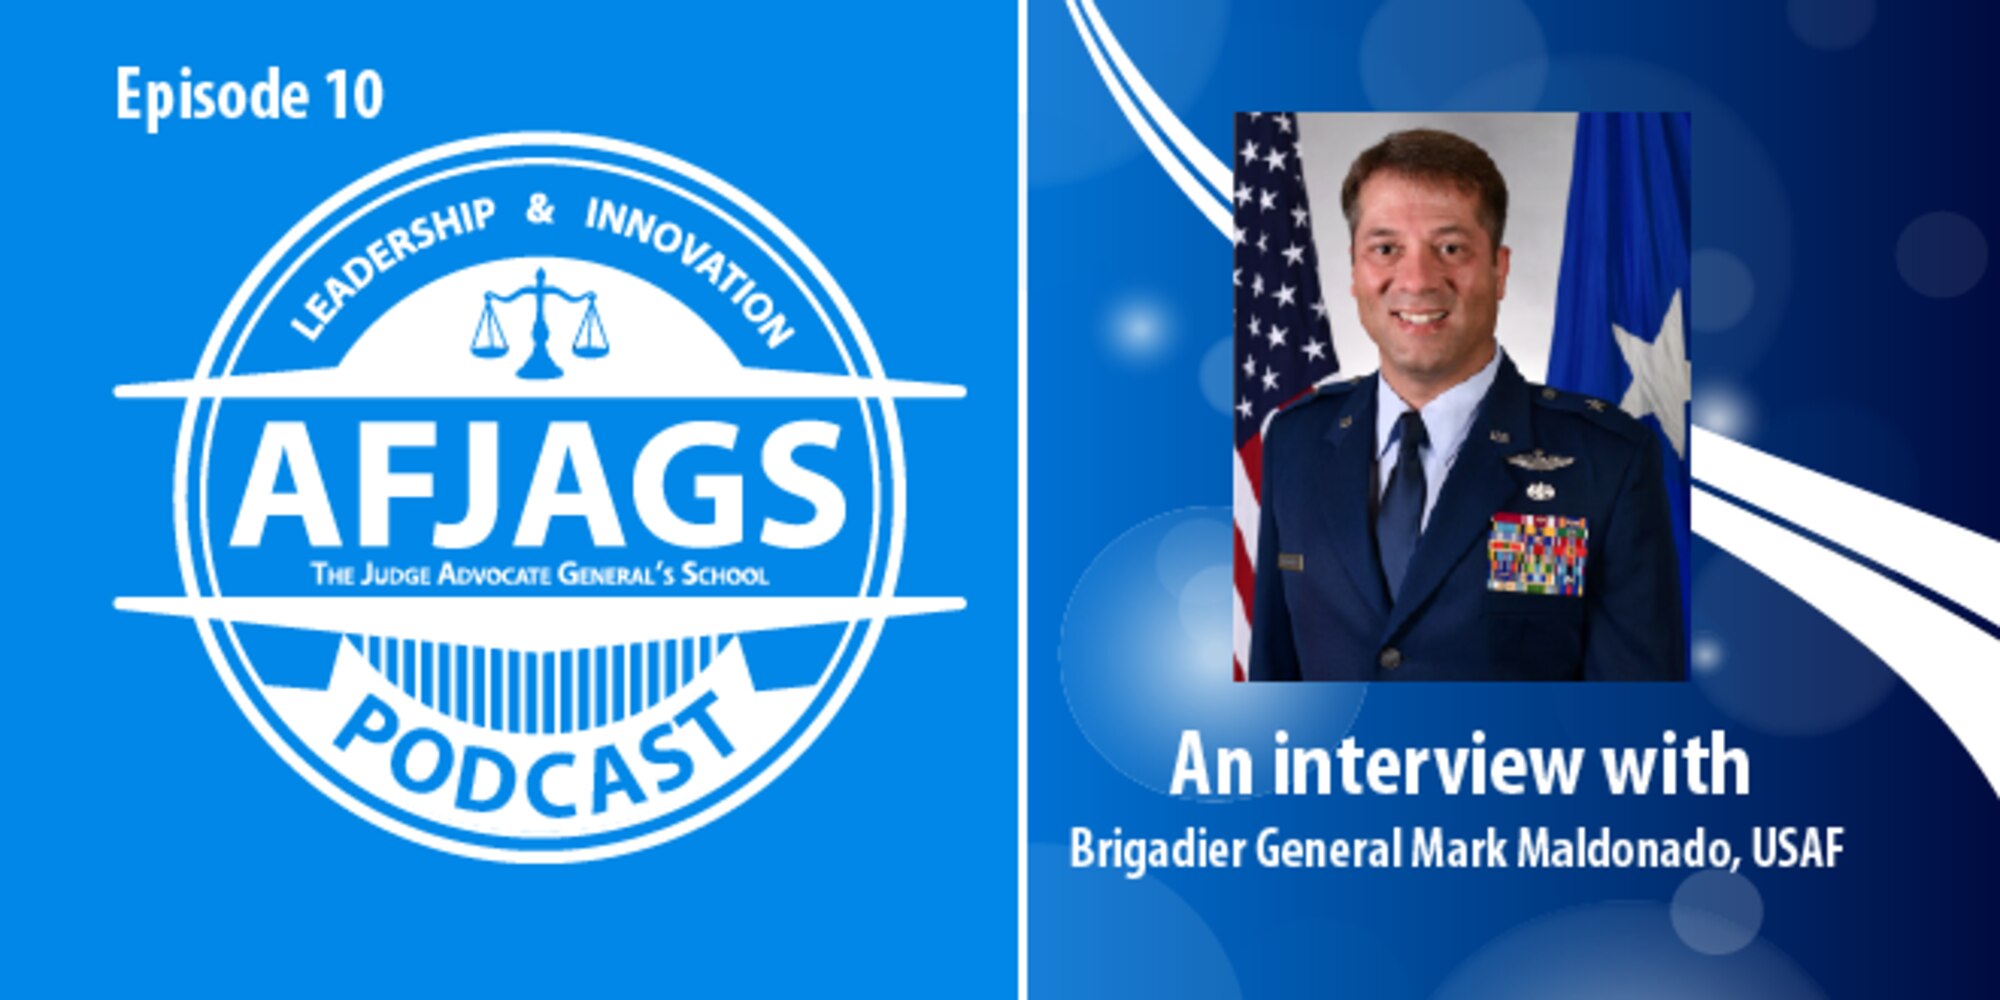 Podcast Episode 10 an interview with Brigadier General Mark Maldonado Part 1